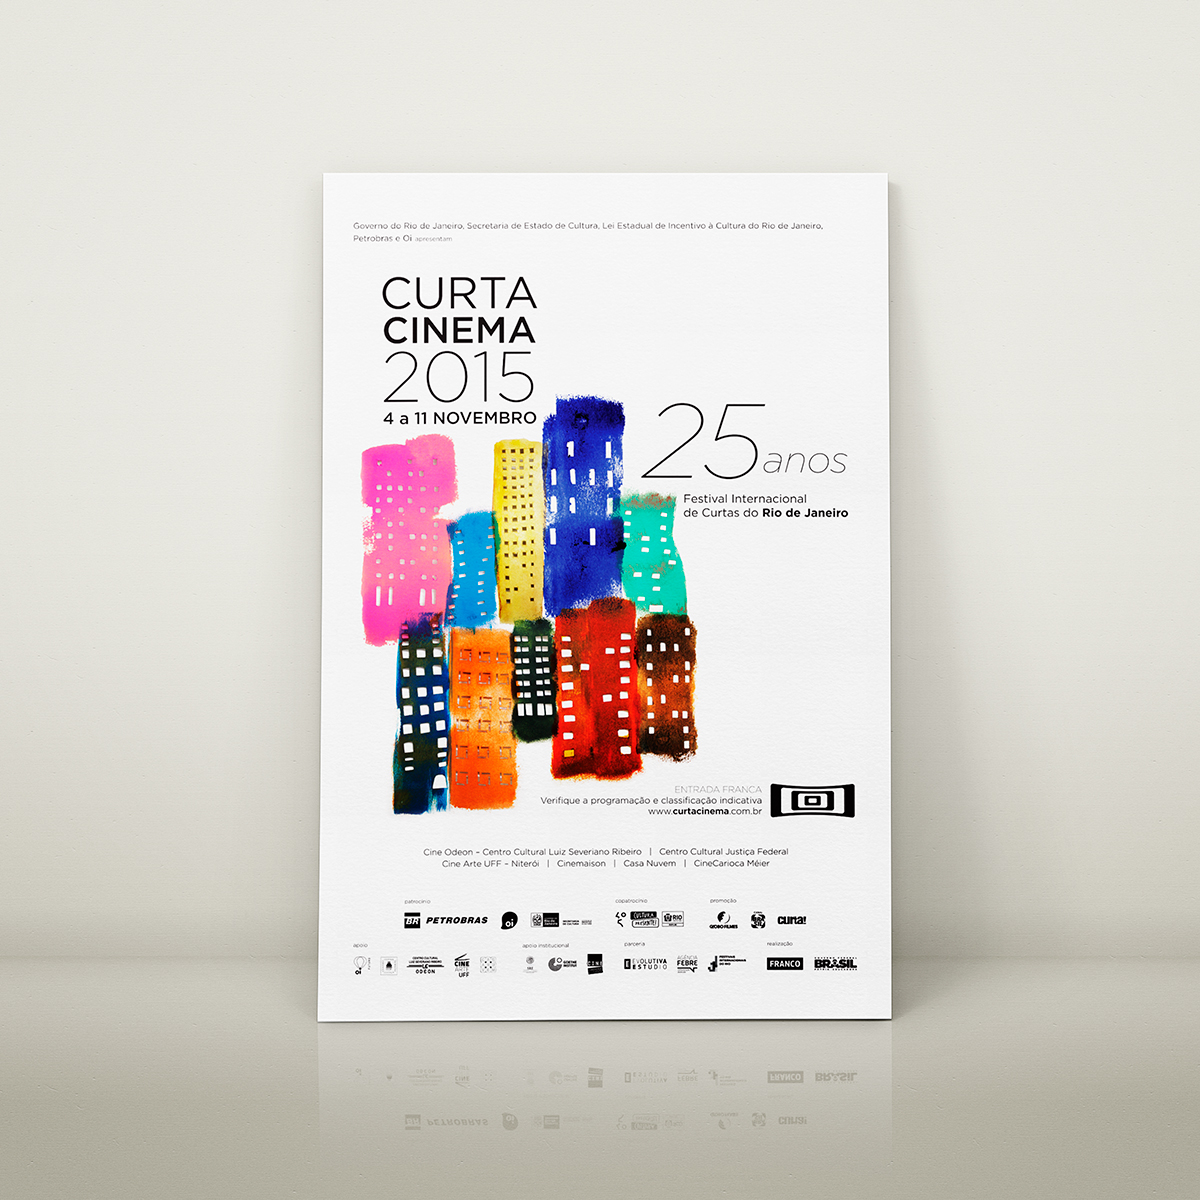 Curta Cinema 2015